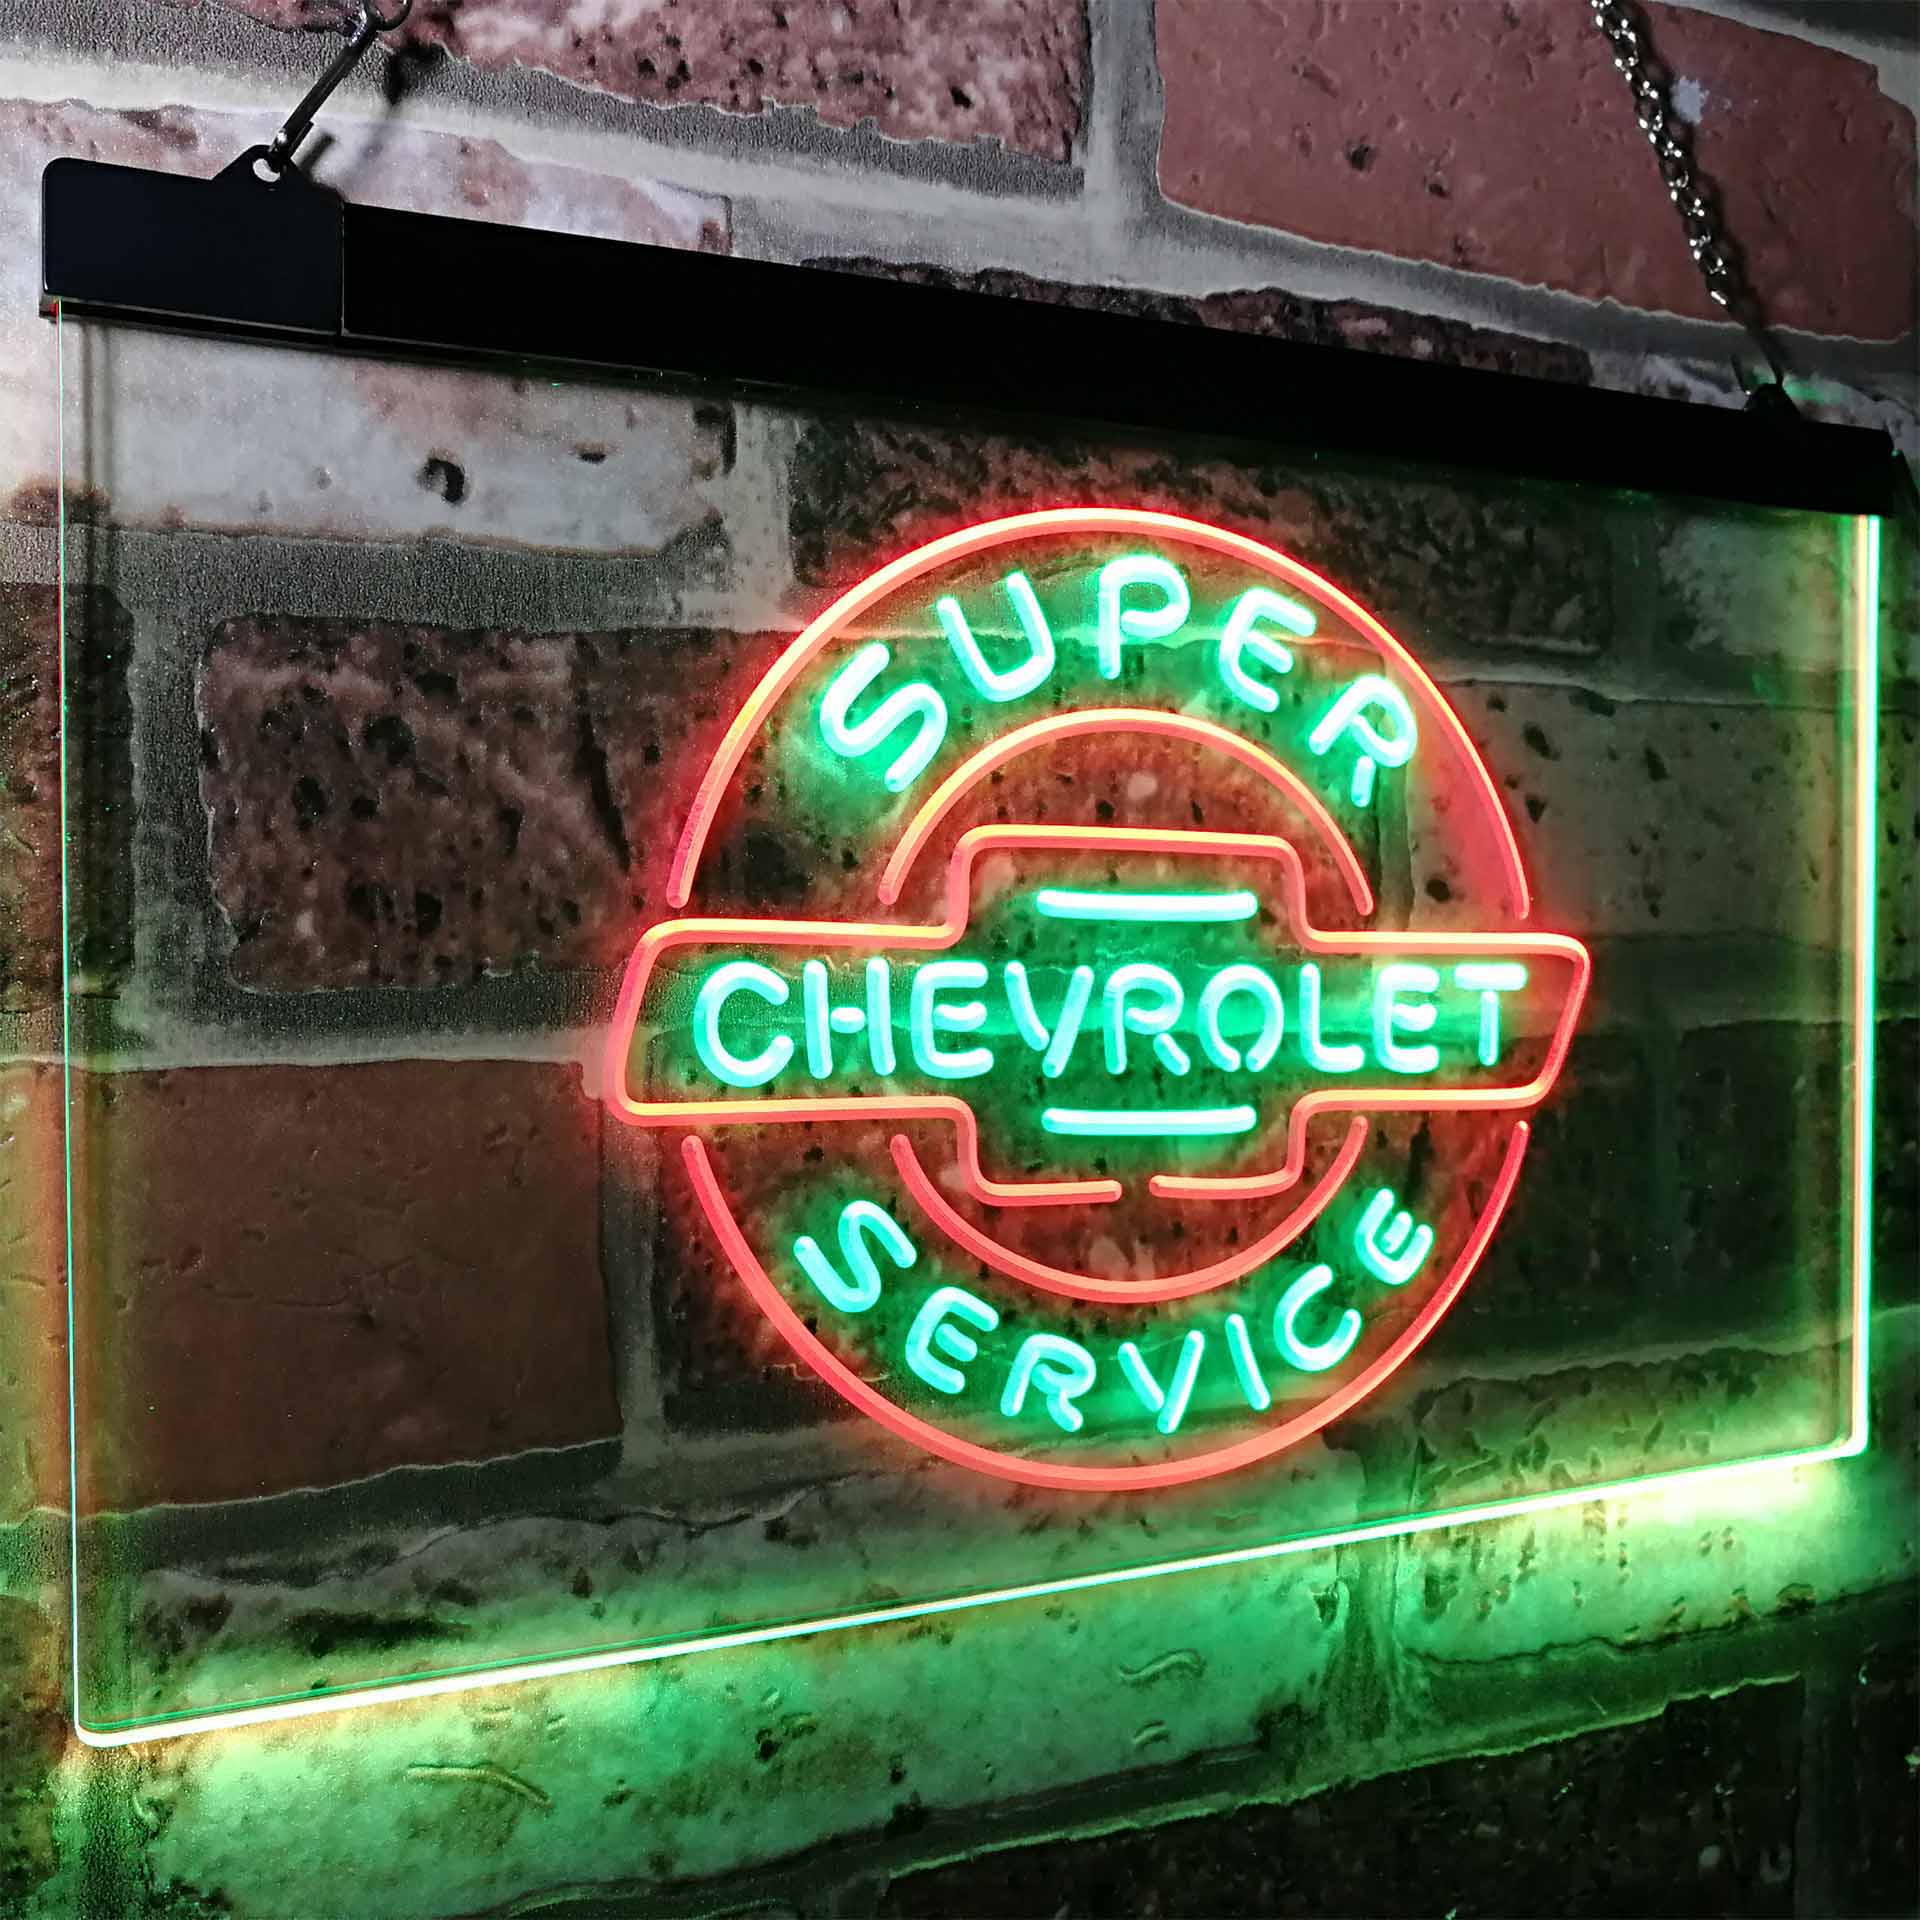 Chevrolet Super Service Car LED Neon Sign